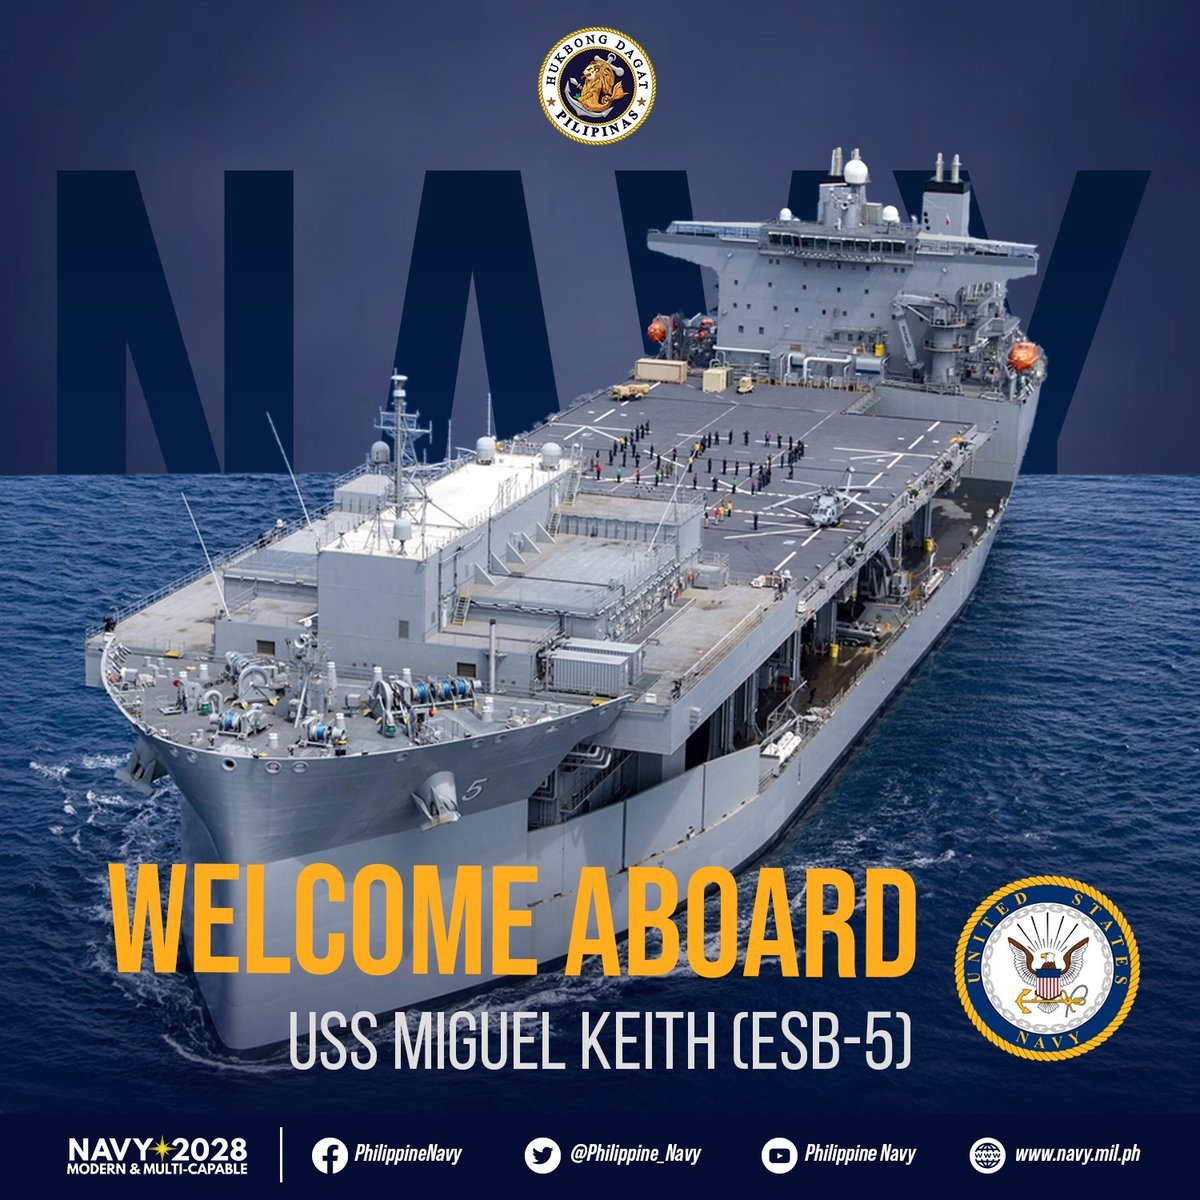 WELCOME ABOARD | The @Philippine_Navy welcomes aboard the @USNavy's @USSMakinIsland (LHD8), #USSAnchorage (LPD23), #USSJohnPMurtha (LPD26) & #USSMiguelKeith (ESB5).
🇵🇭👋🇺🇸

#InTheNavy 💪⚓️
#FriendsPartnersAllies
#Balikatan2023 
#ModernandMultiCapablePHNavy
#AFPyoucanTRUST